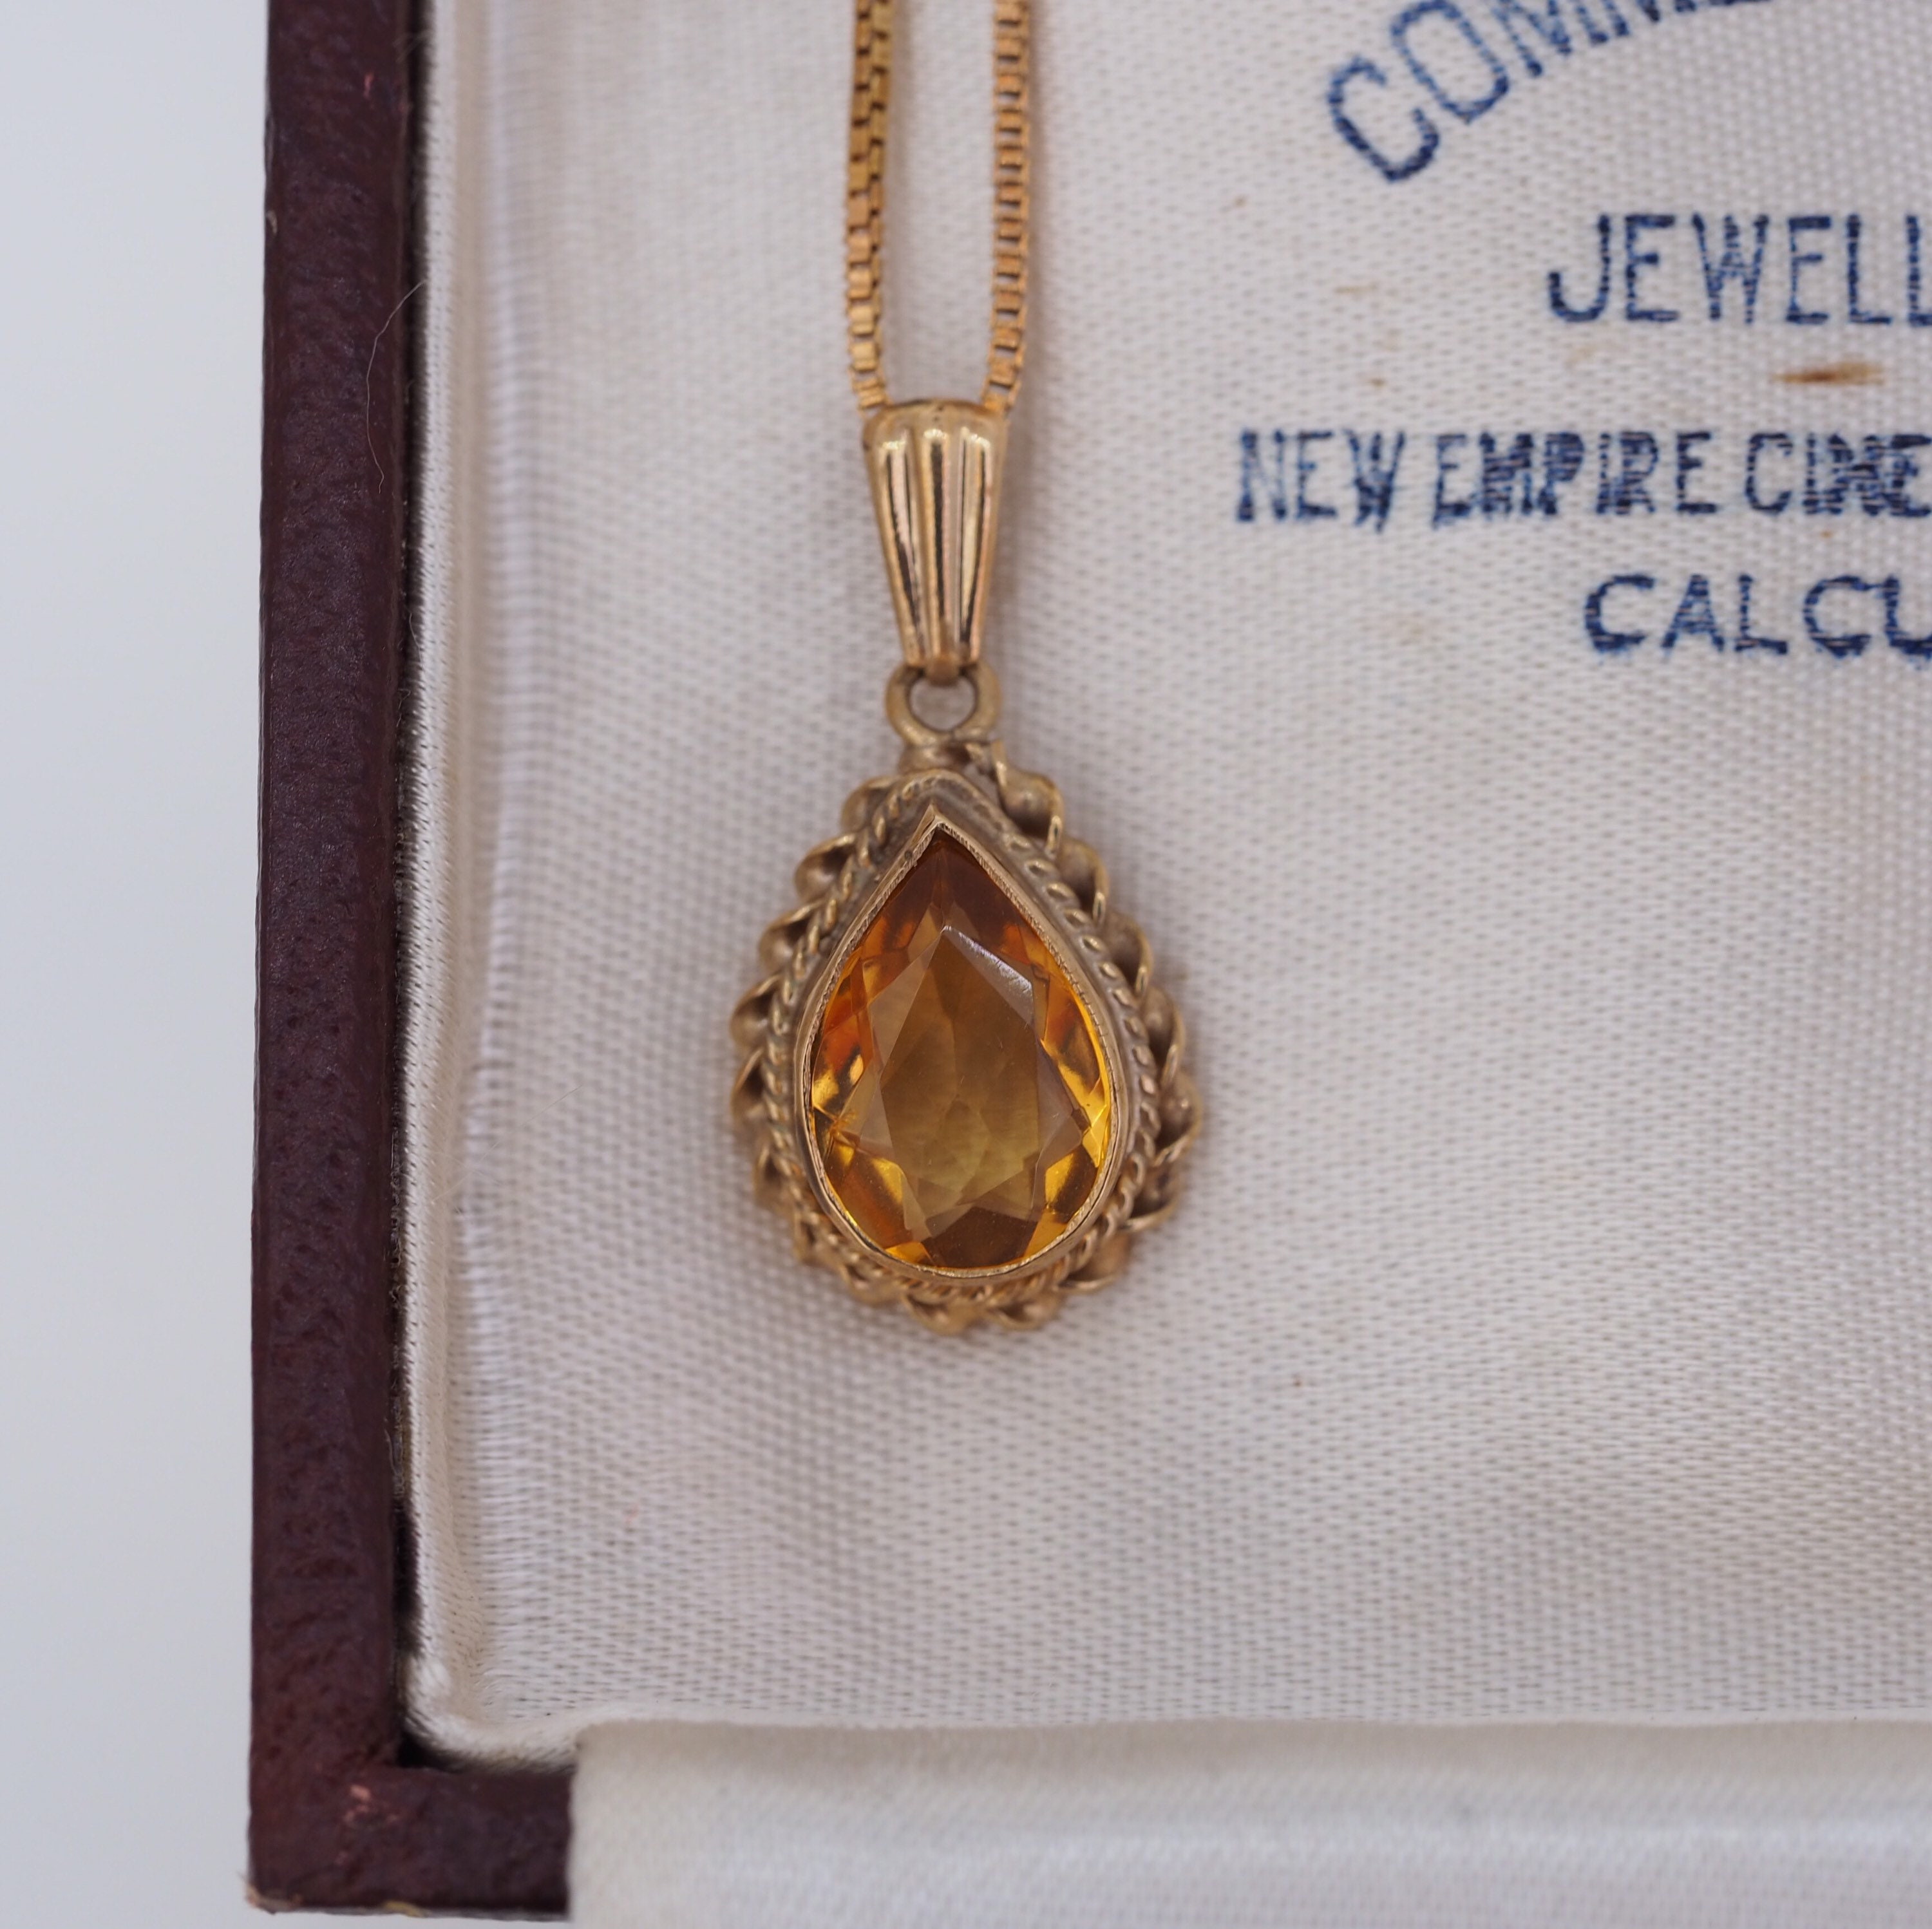 9ct Gold Personalised Wanderlust Compass Pendant Necklace – Generous APE